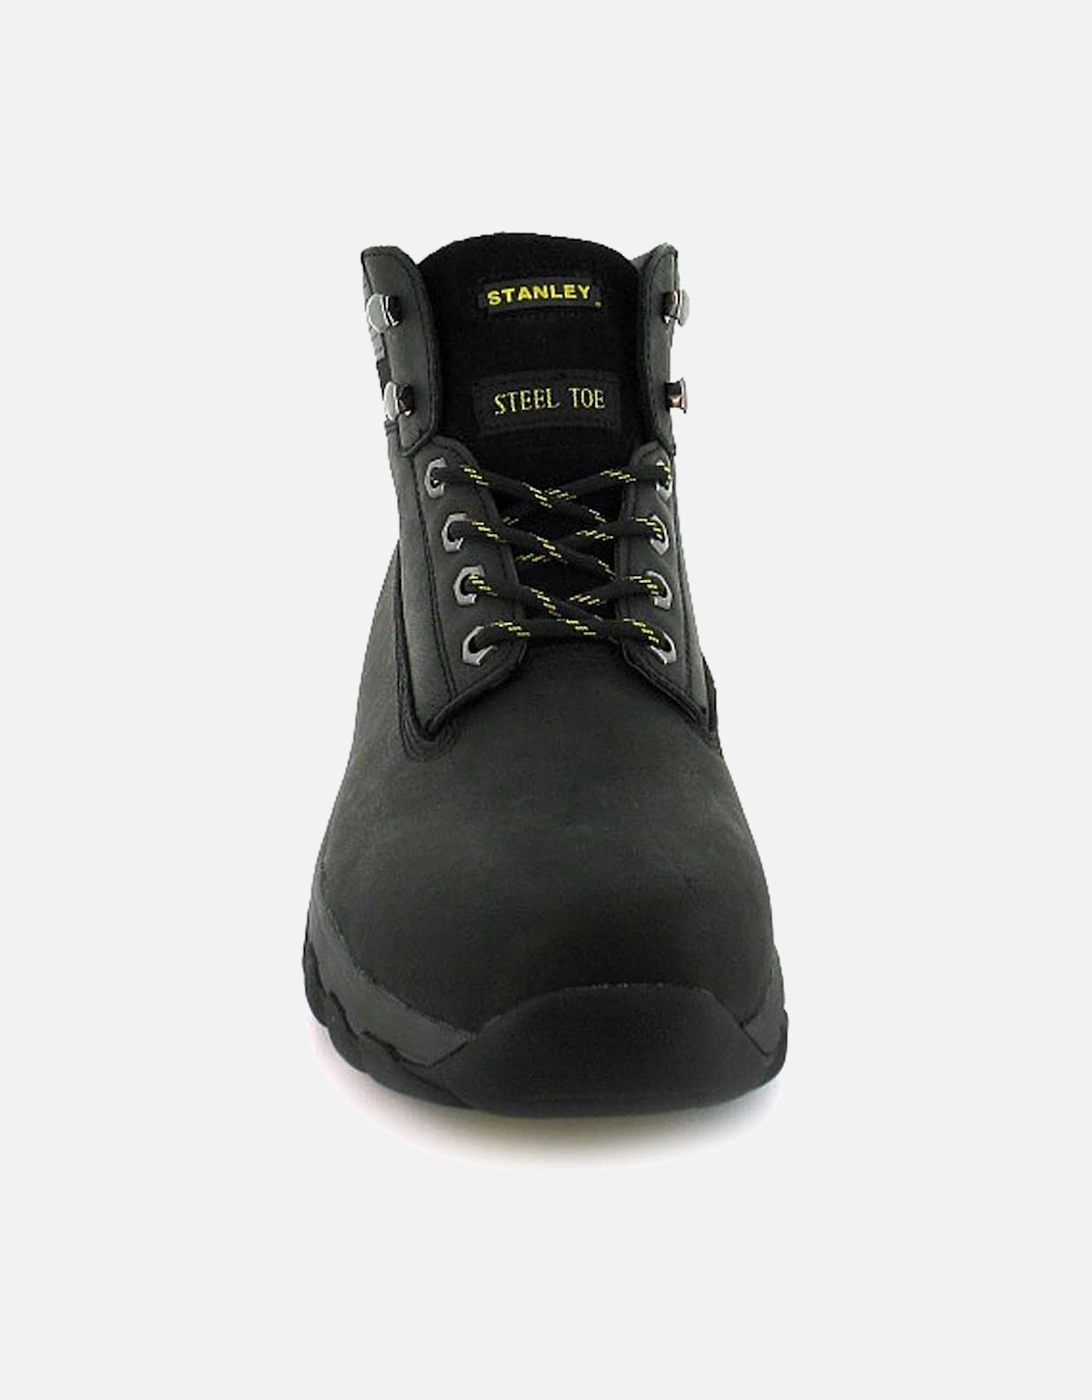 Mens Safety Boots Hartford Leather Lace Up black UK Size